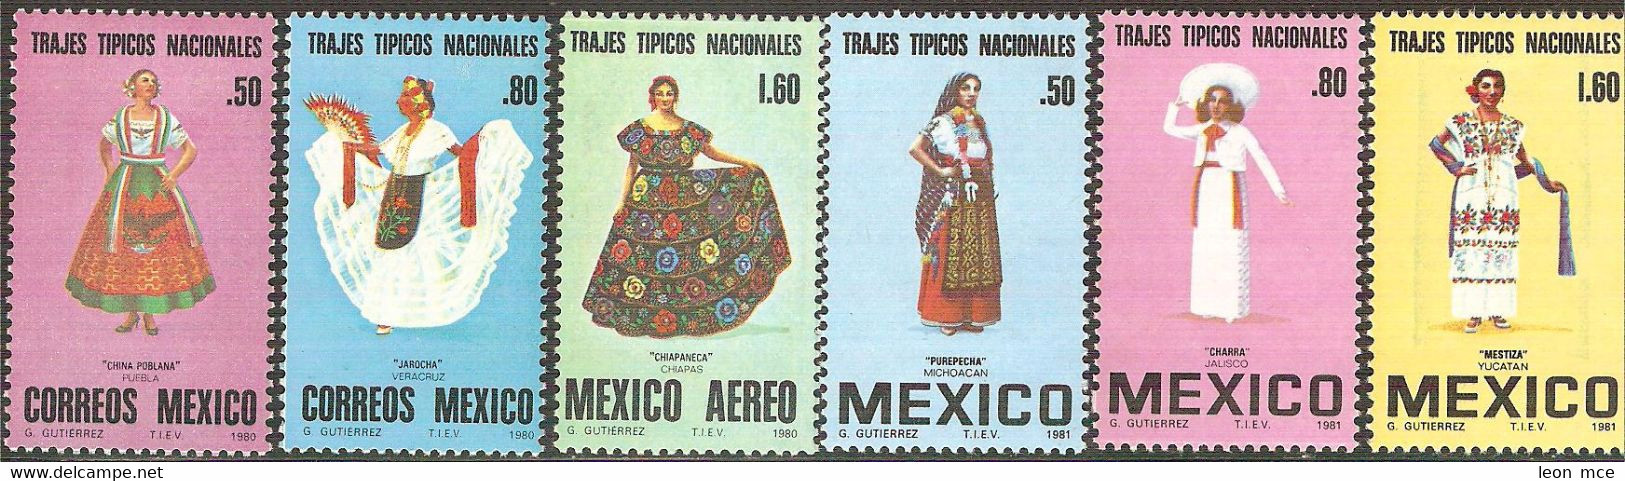 1980-1981 MÉXICO TRAJES TÍPICOS 2 SERIES MNH, TRADITIONAL COSTUMES - Messico